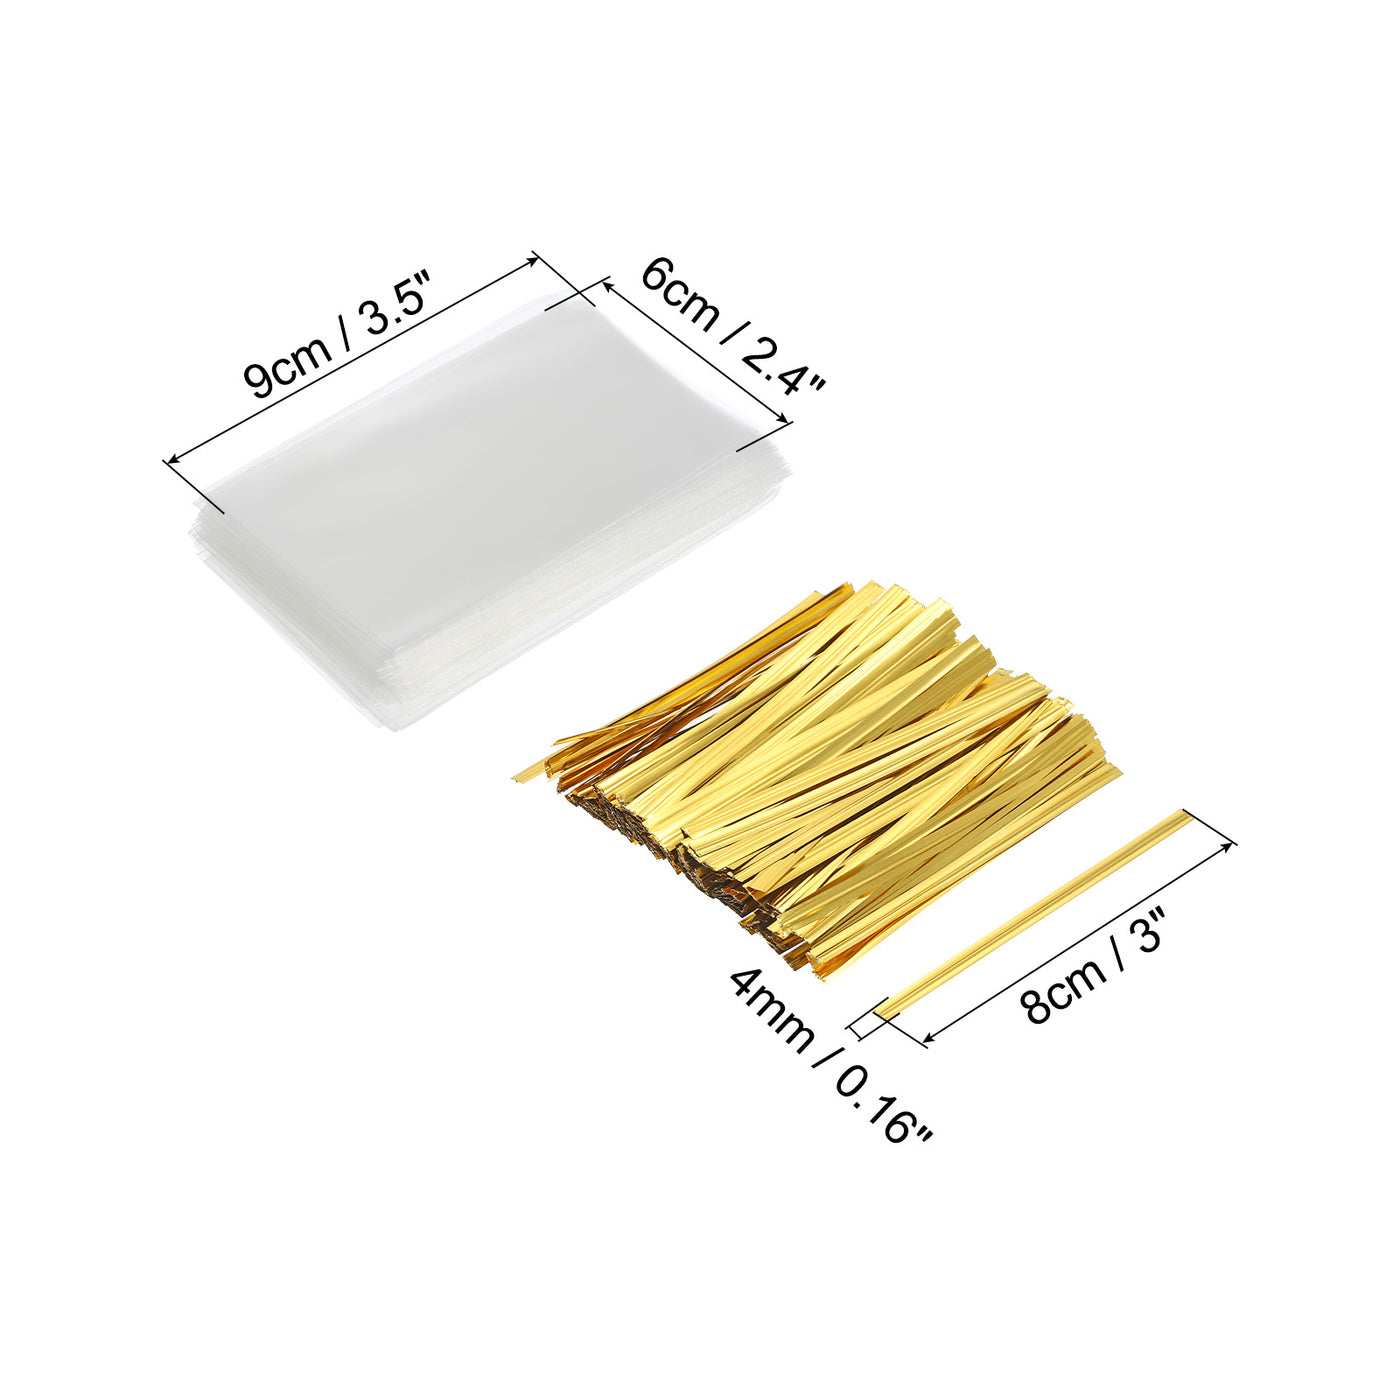 Harfington Clear Plastic Bags 3.5"x2.5" with 3" Foil Twist Ties Gold Tone 200 Set